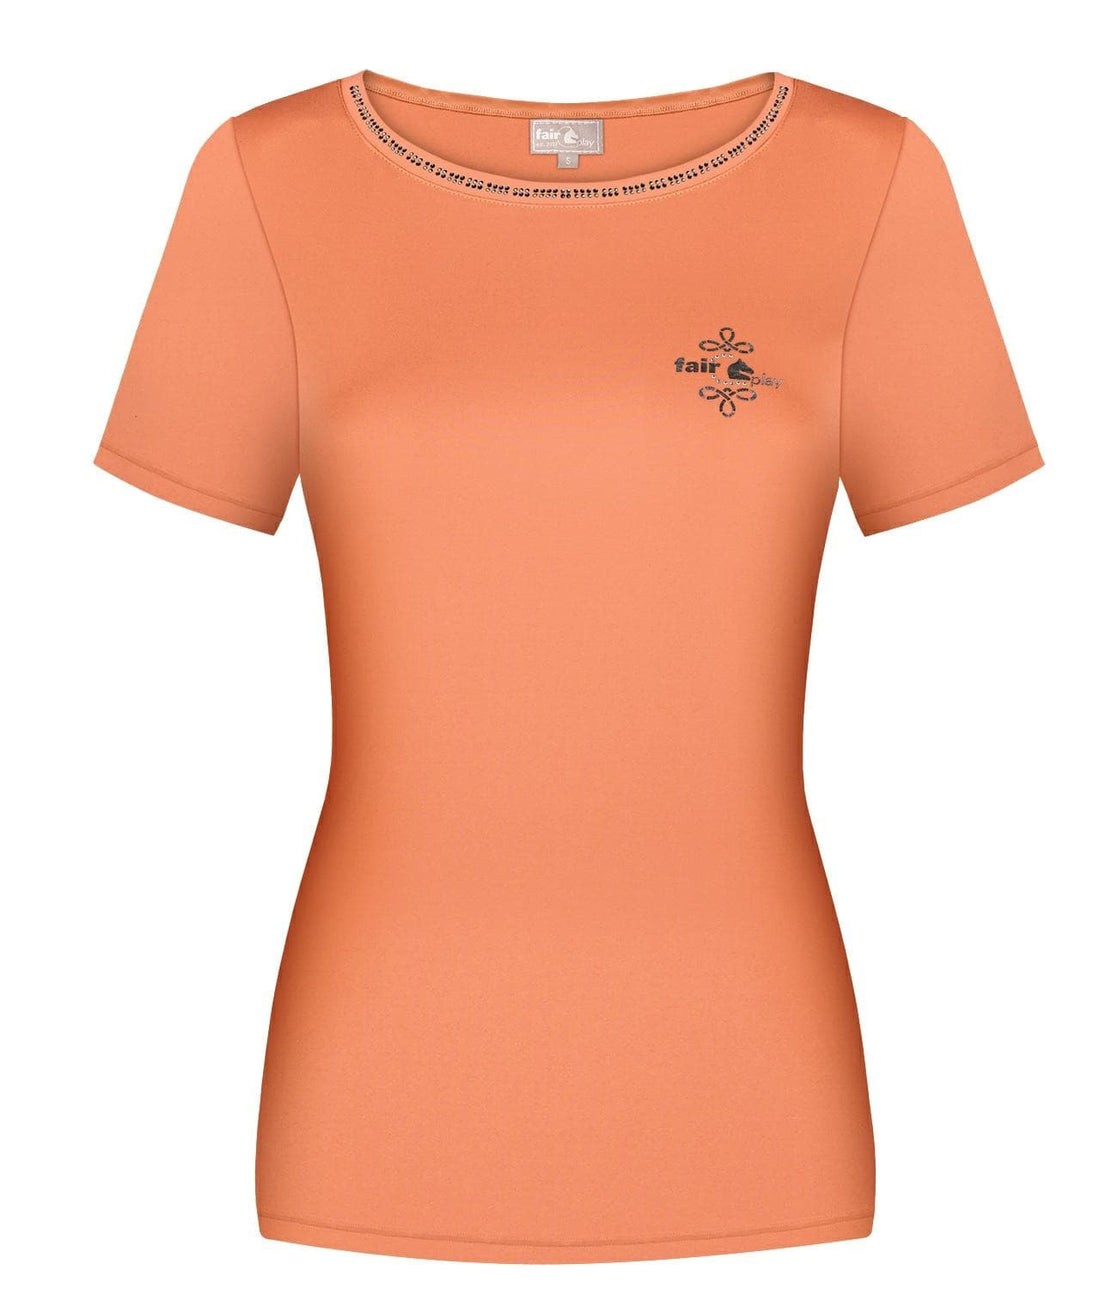 Fairplay Dacy T-Shirt, Apricote Crush